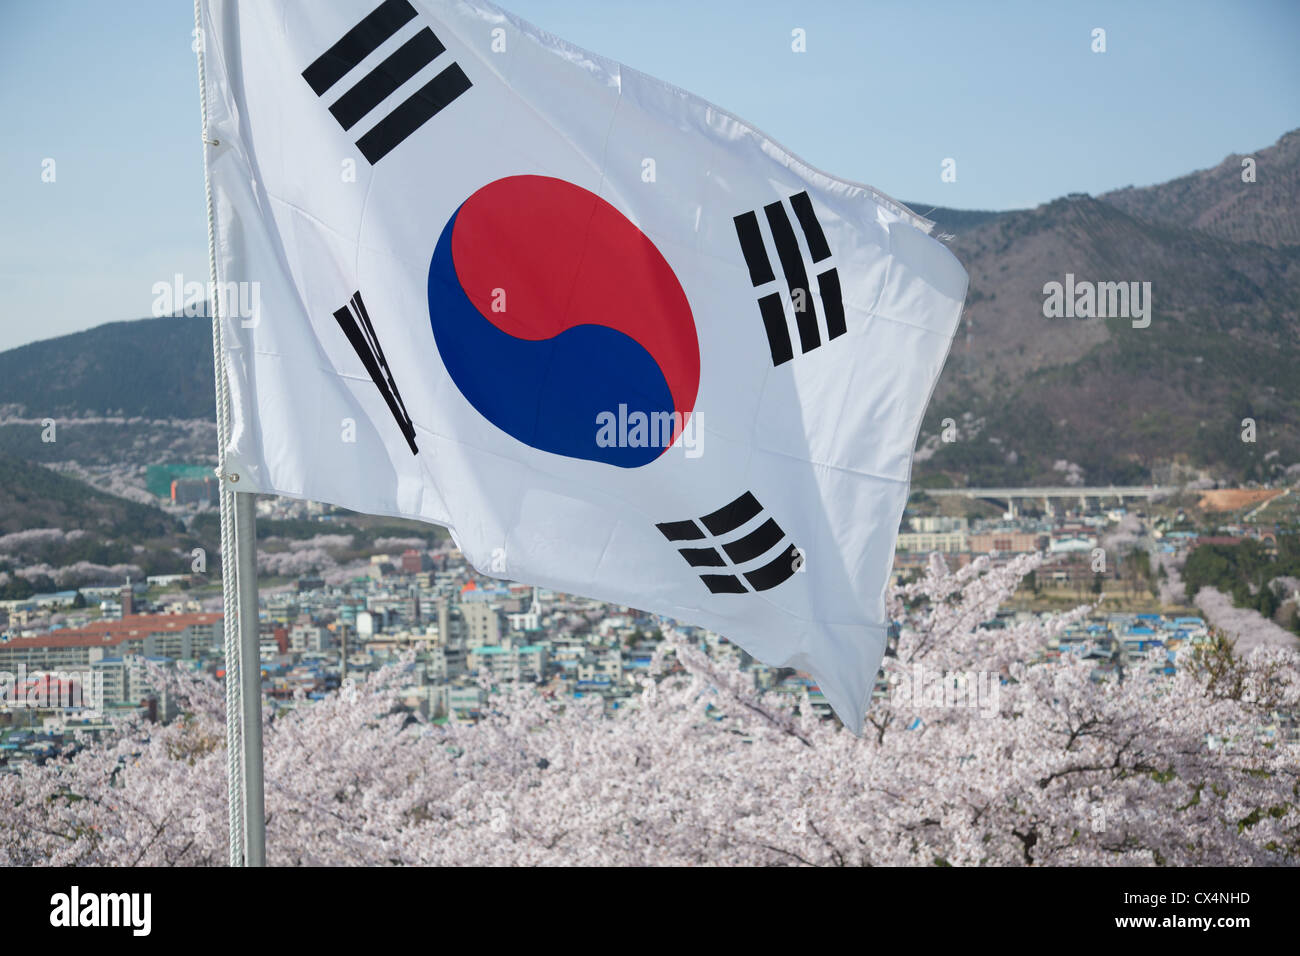 A Korean flag flies over cherry blossoms in Jinhae, South Korea during the cherry blossom festival Stock Photo